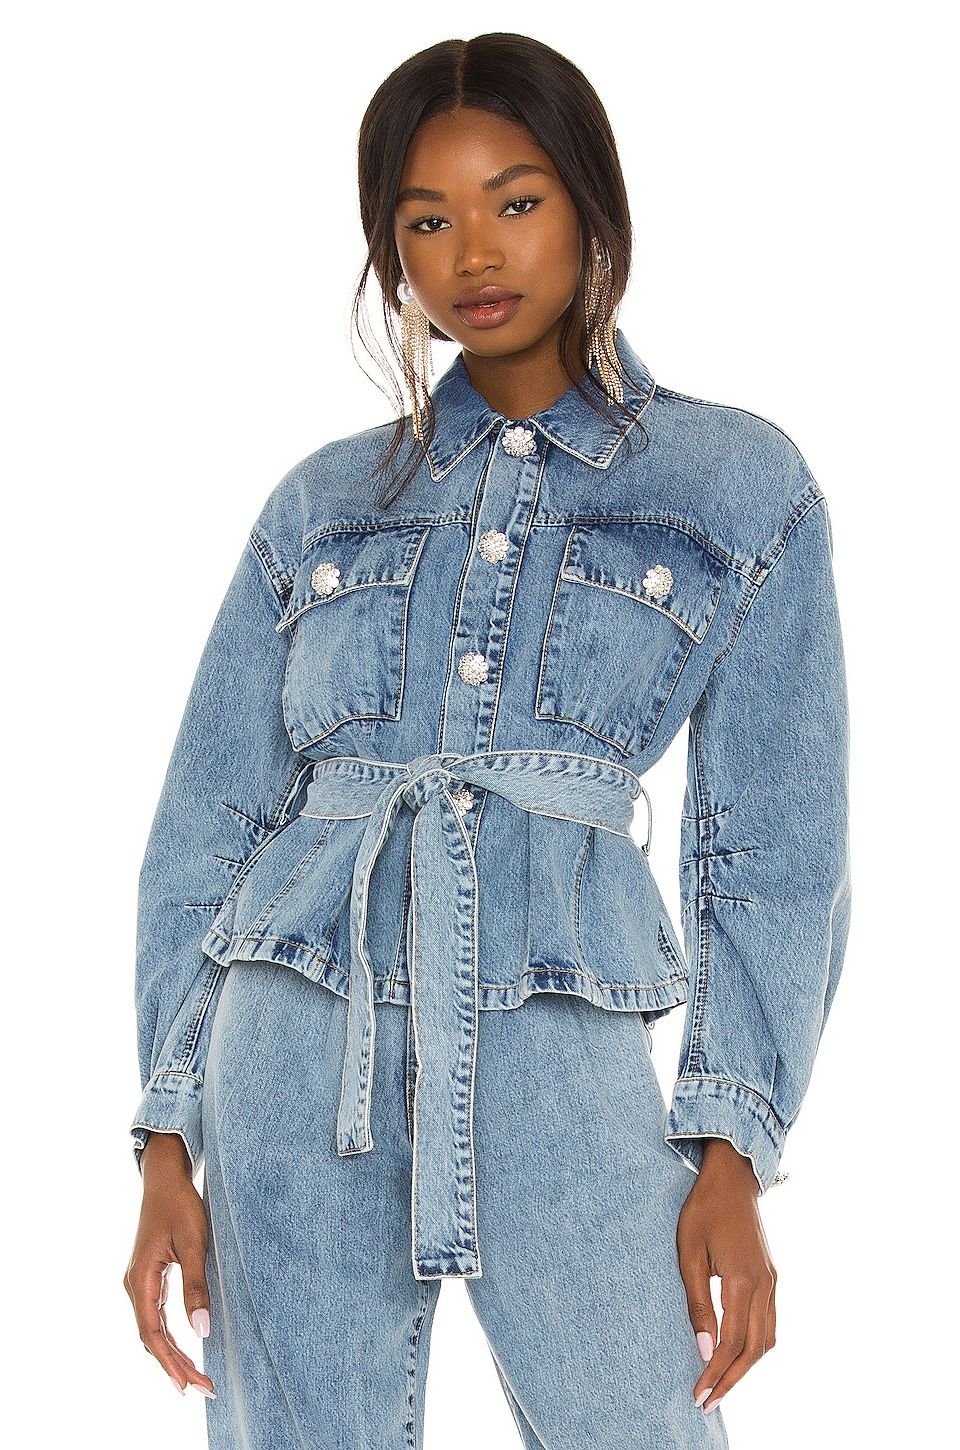 Ladies Denim Blue Jacket Crop Style Womens Button Up Jean Coat Vintage Outerwear